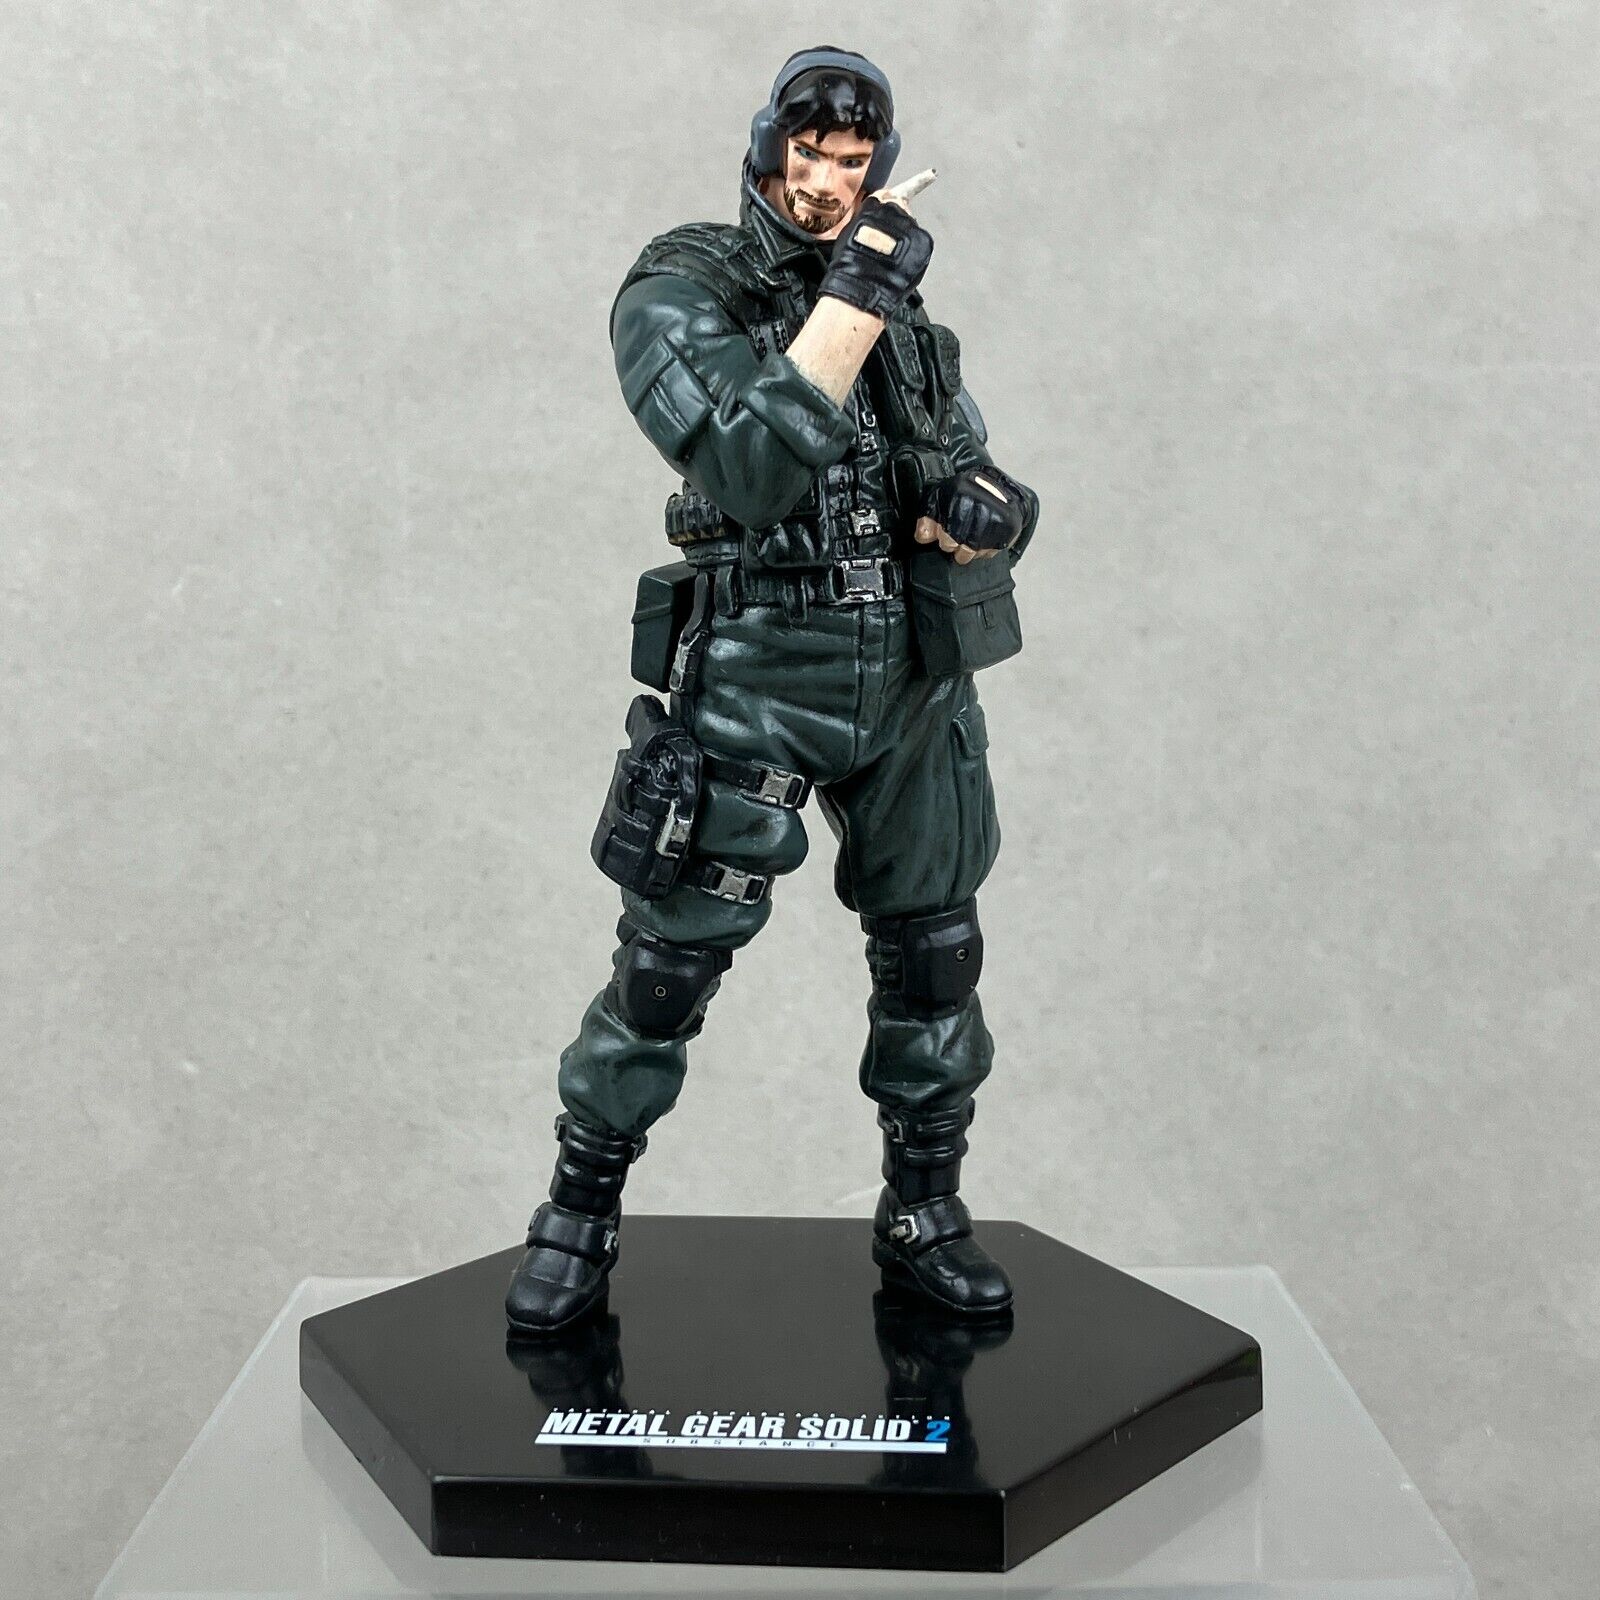 Yamato Metal Gear Solid 2 Iroquois Pliskin Konami Figure Collection Japan Import